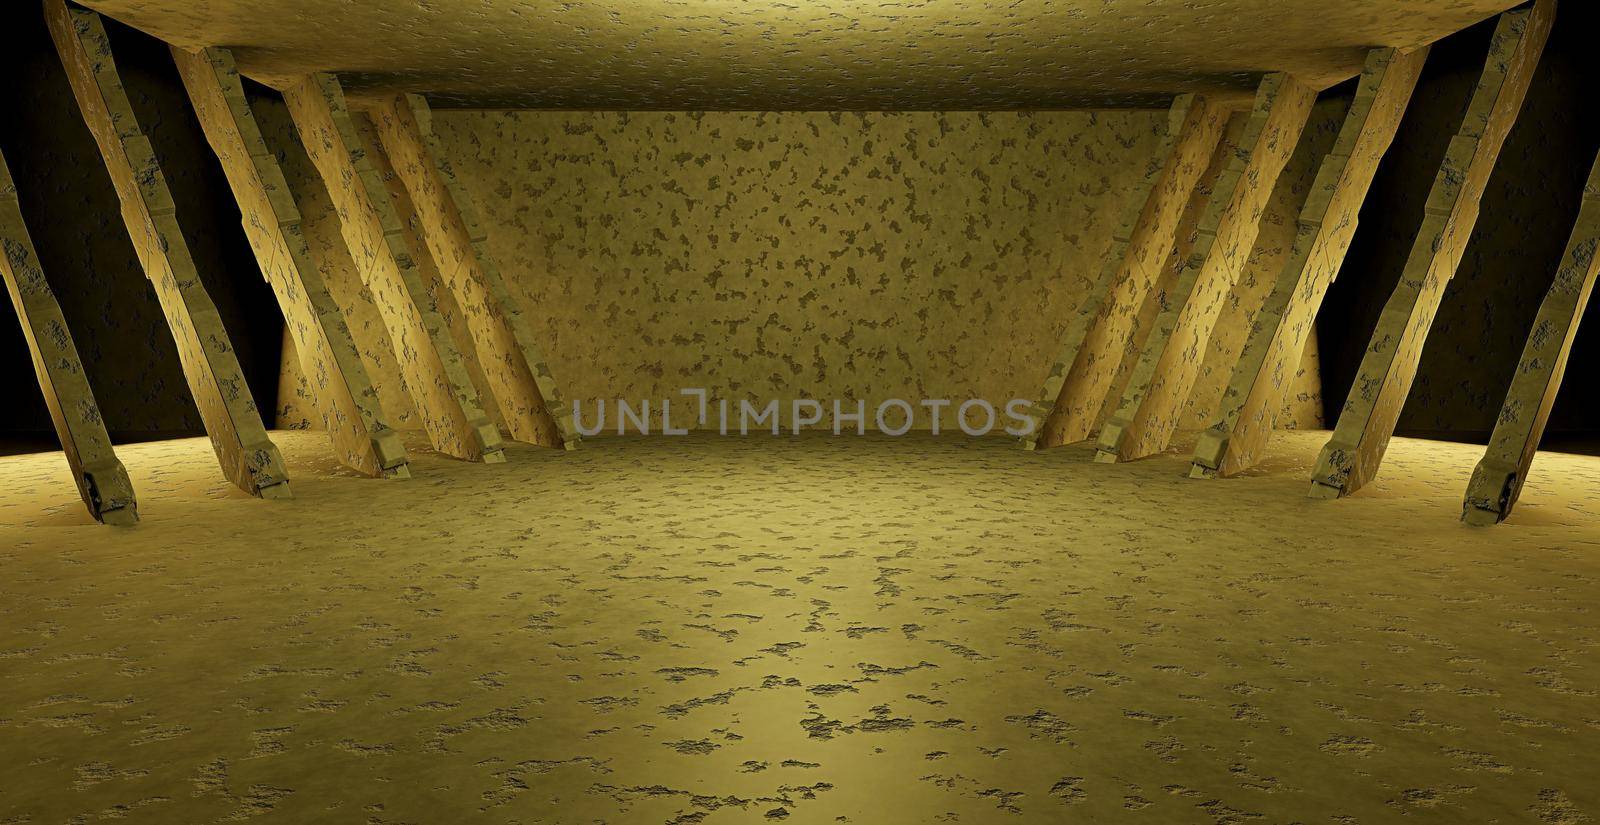 Empty Futuristic Club Underground Scene Dark Dark Brown Illustrative Banner Background Wallpaper Space Age Concept 3D Illustration by yay_lmrb